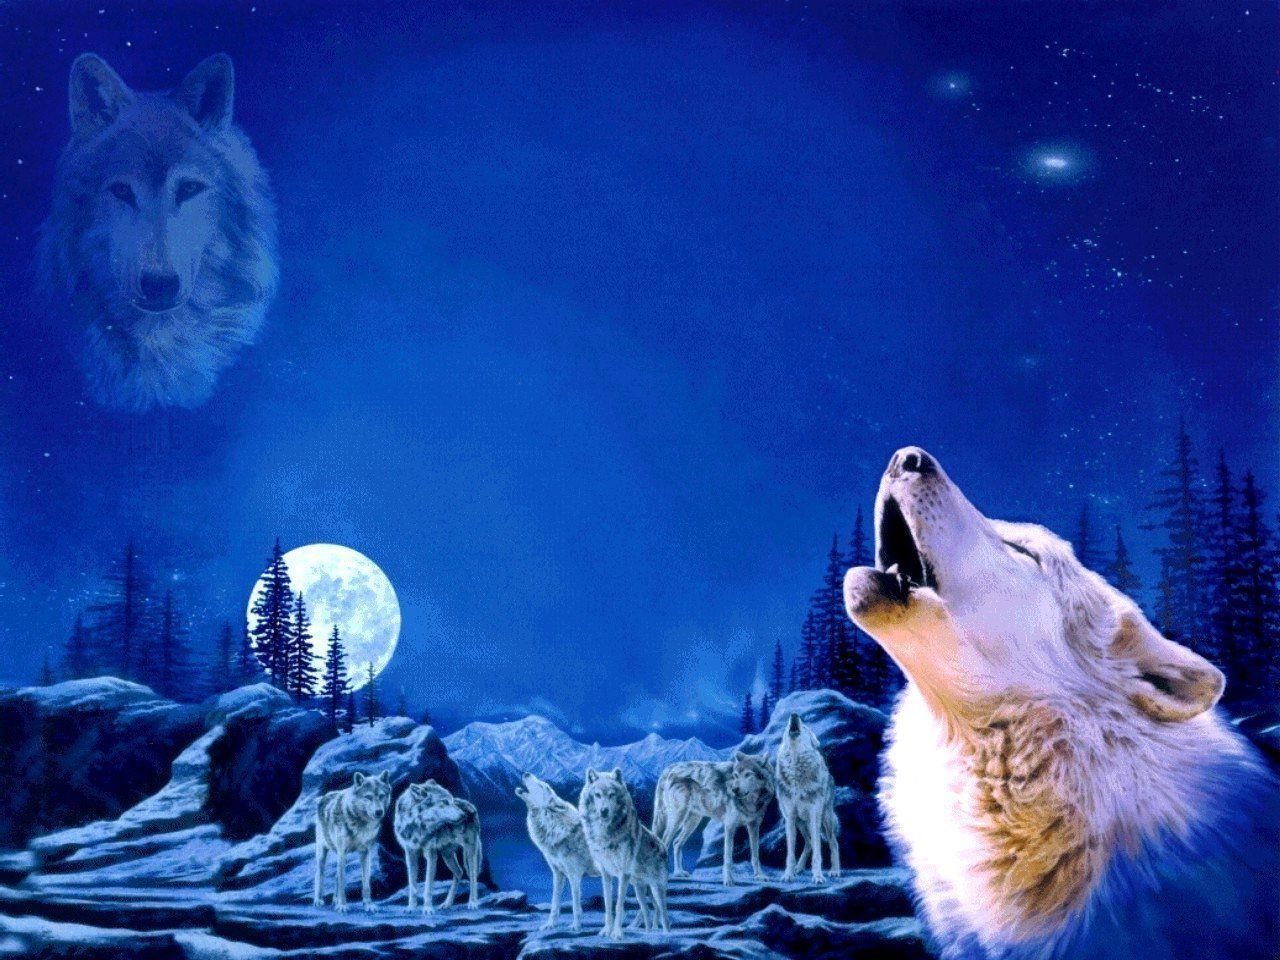 Wallpaper For > Howling Wolf Wallpaper